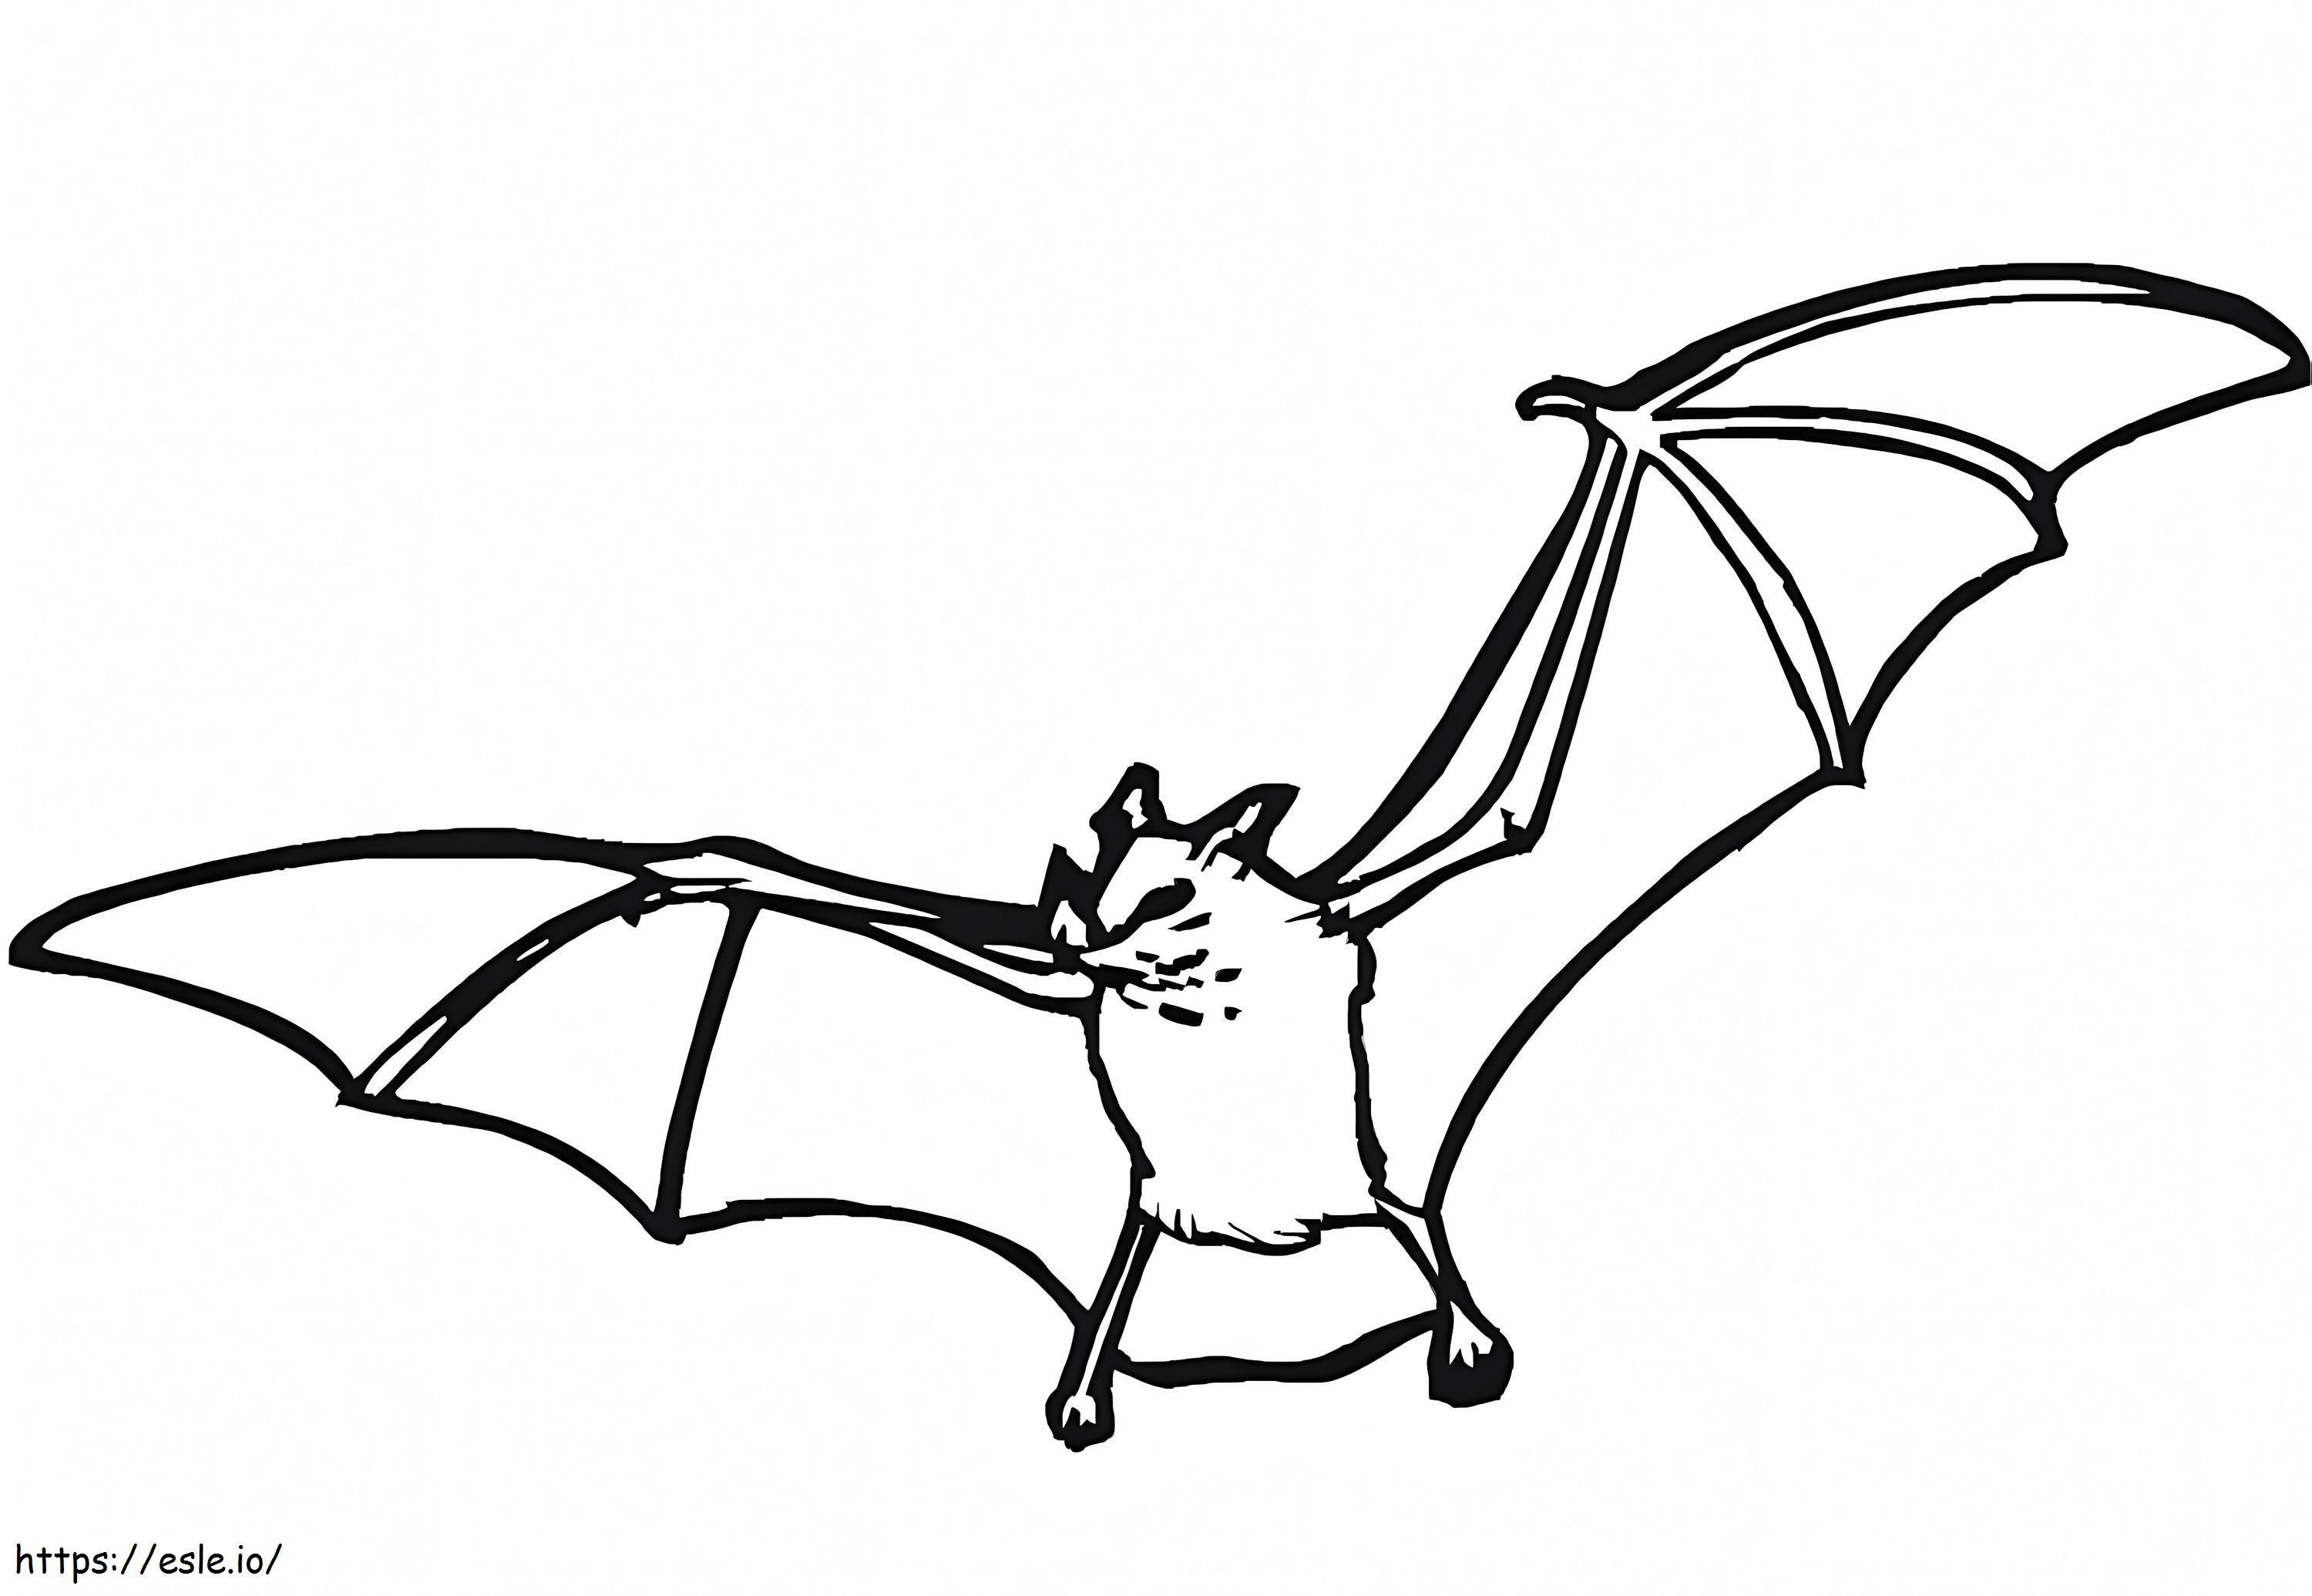 Normal Bat coloring page